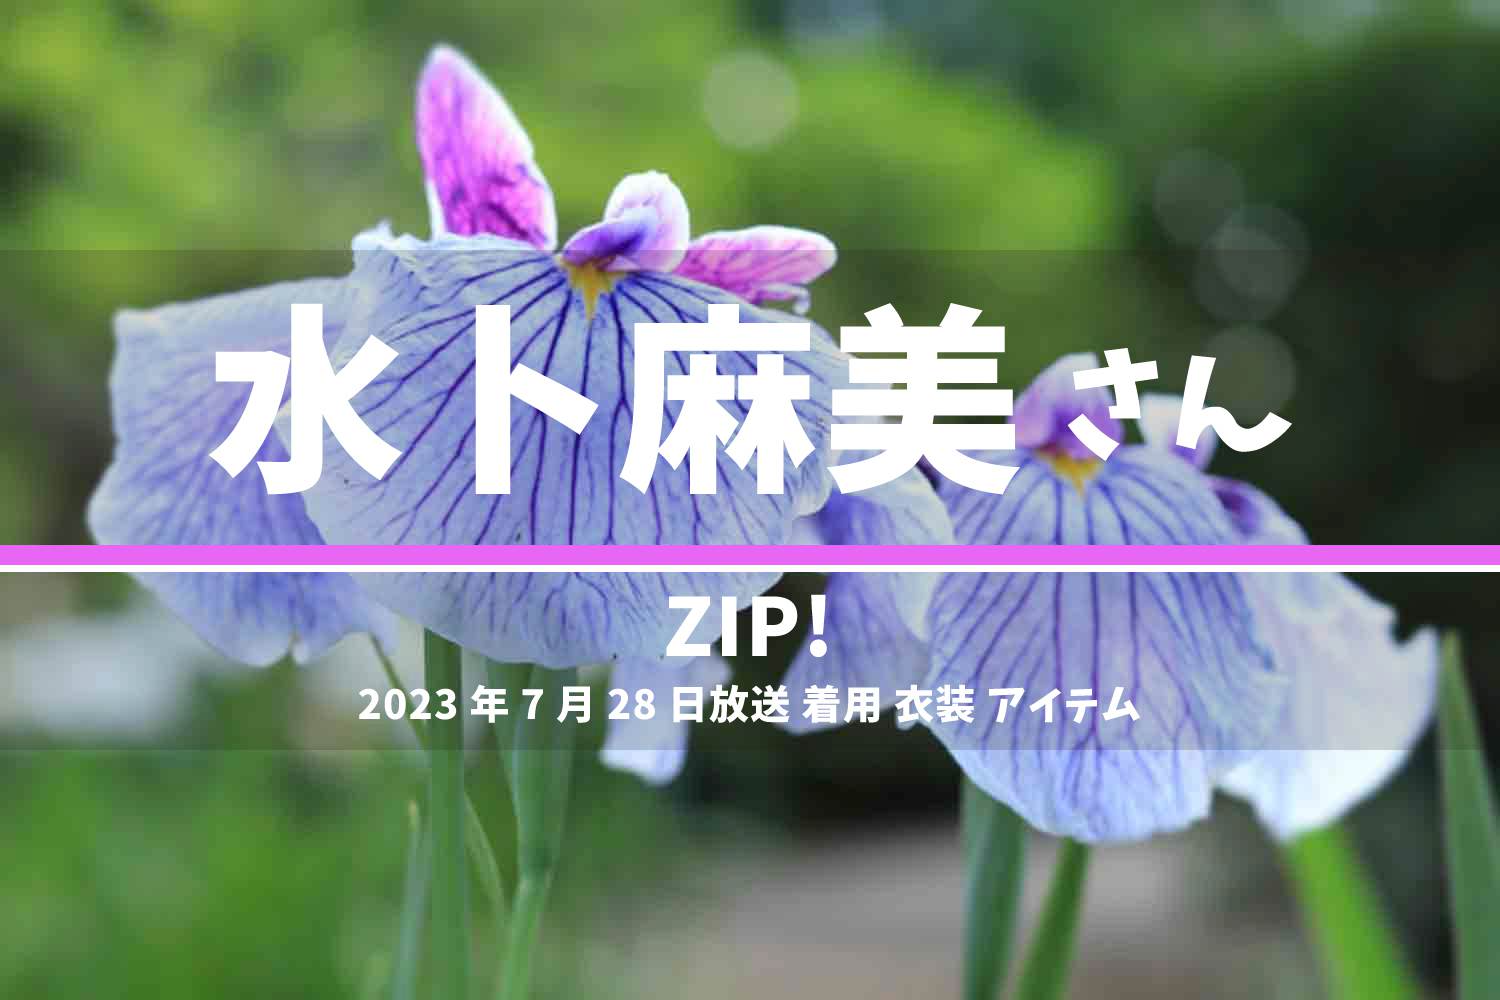 ZIP! 水卜麻美さん 番組 衣装 2023年7月28日放送